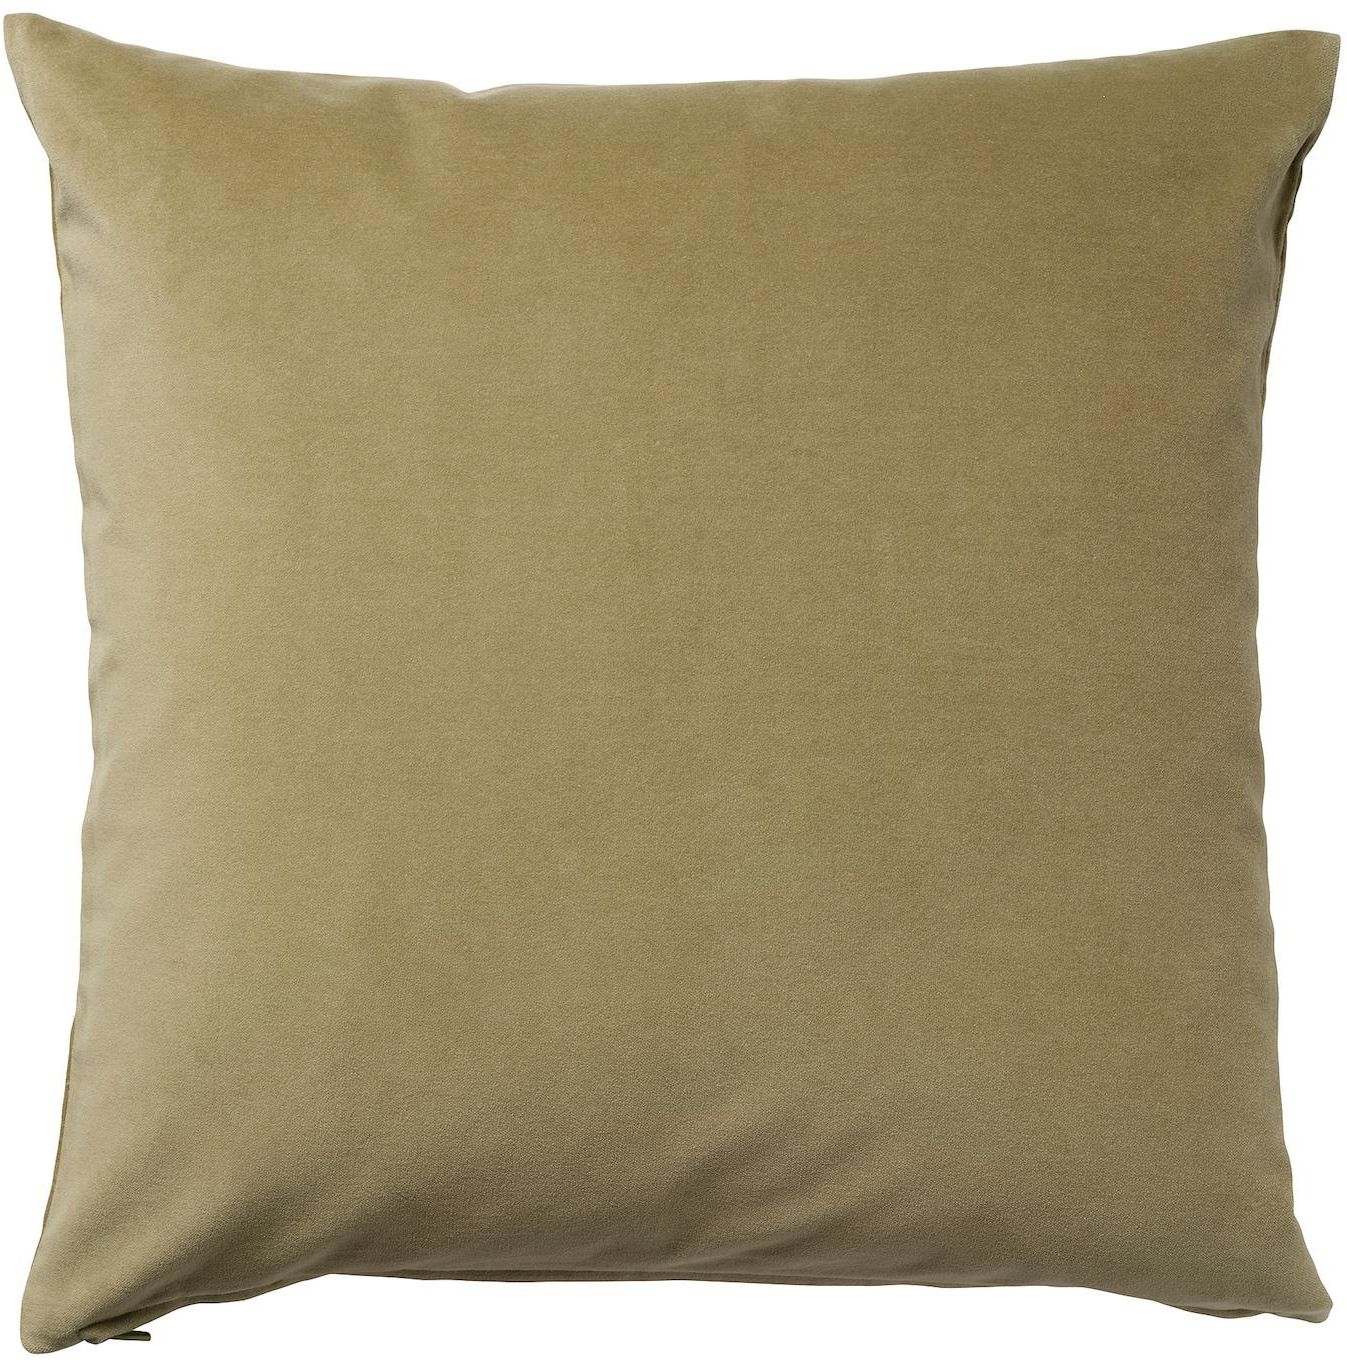 SANELA Cushion cover - light olive-green 50x50 cm